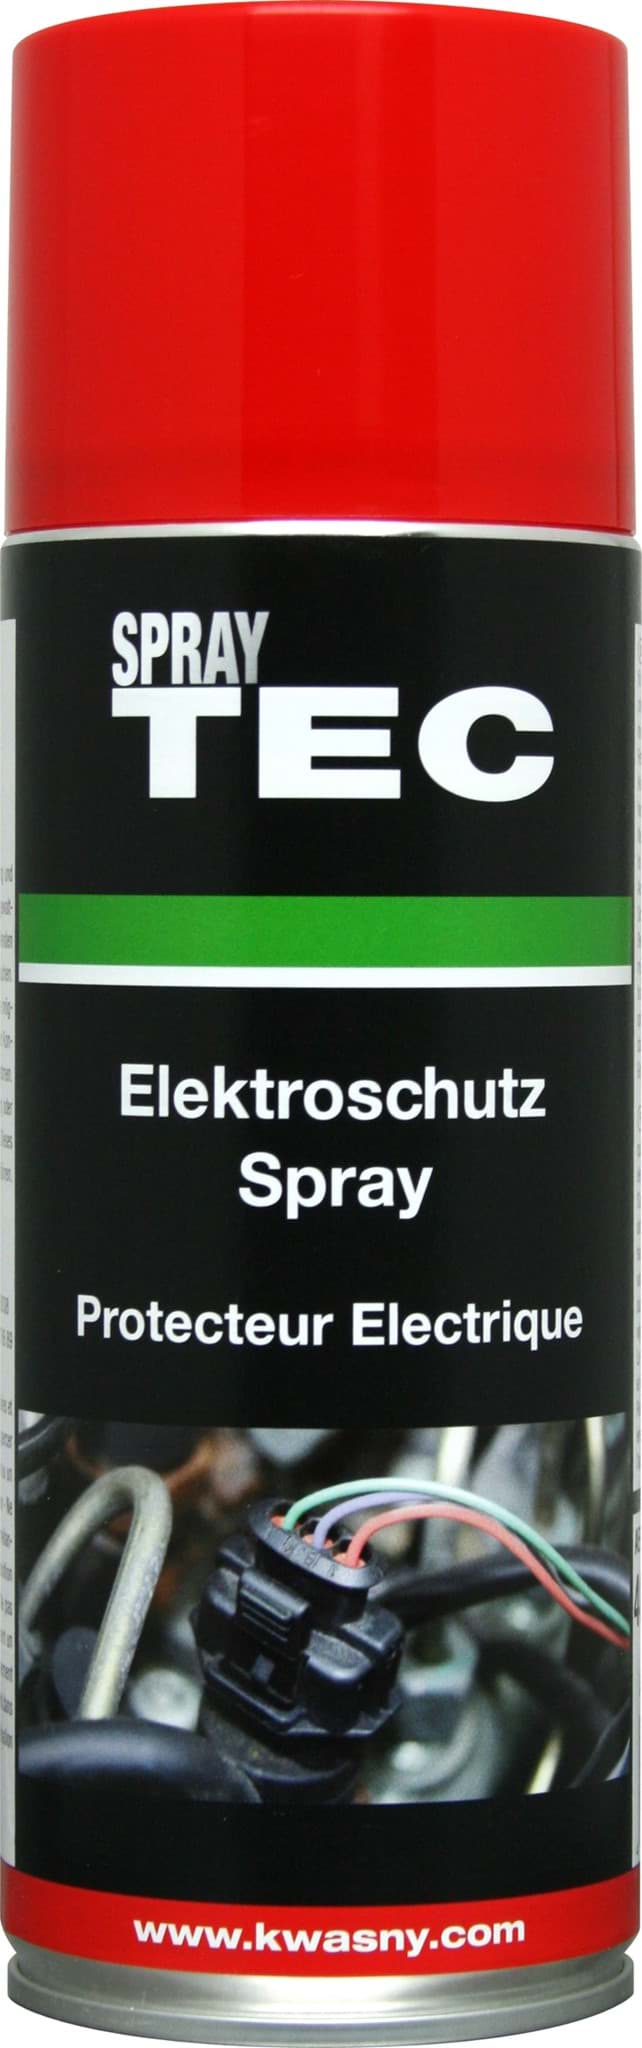 Изображение Elektroschutz-Spray 400ml SprayTEC 235003